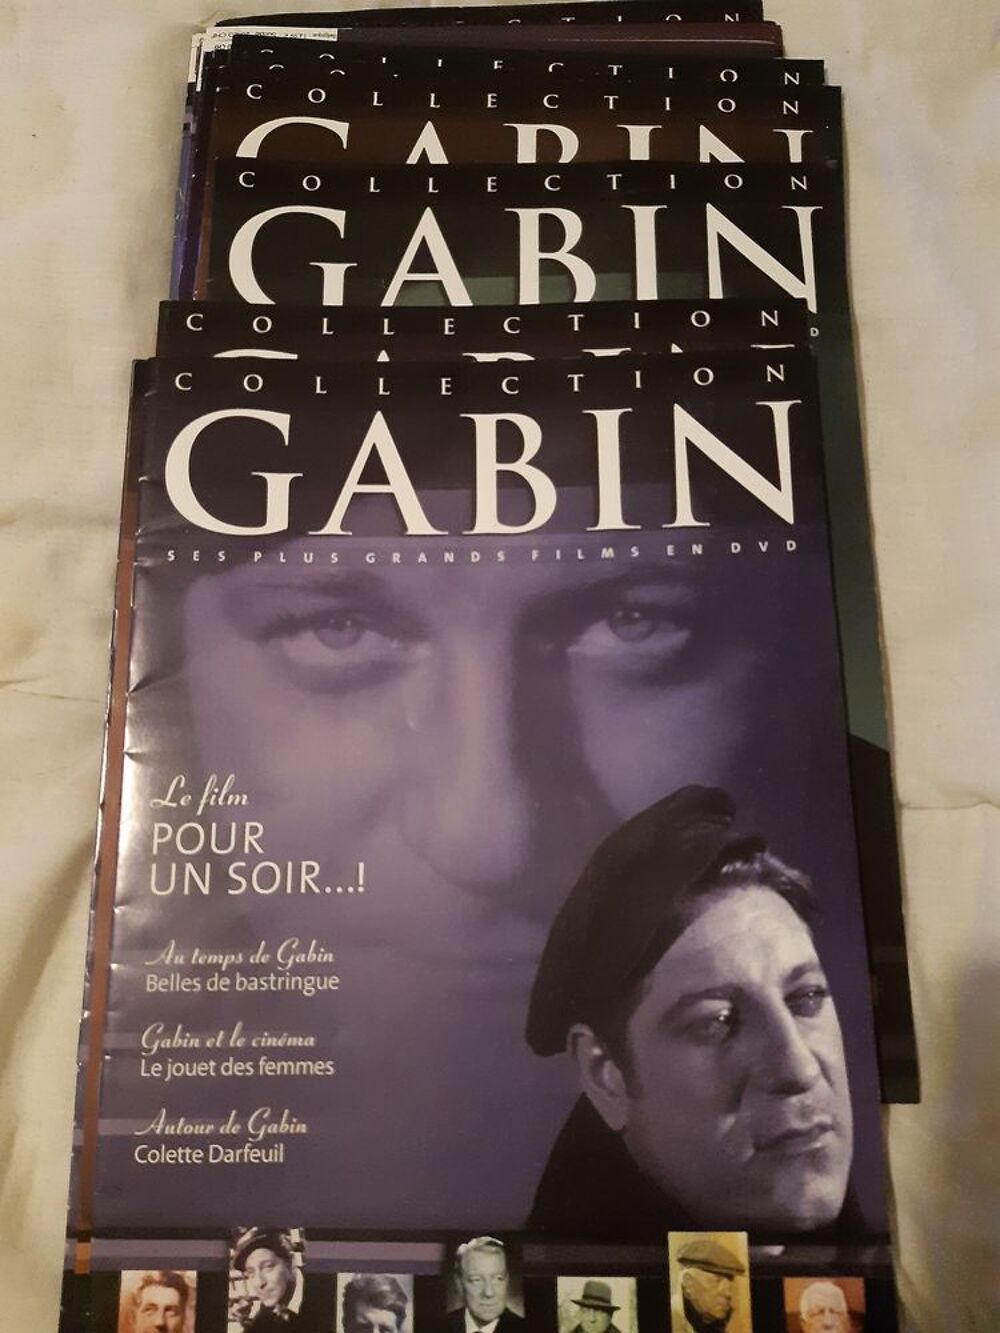 COLLECTION COMPLETE DVD JEAN GABIN. DVD et blu-ray